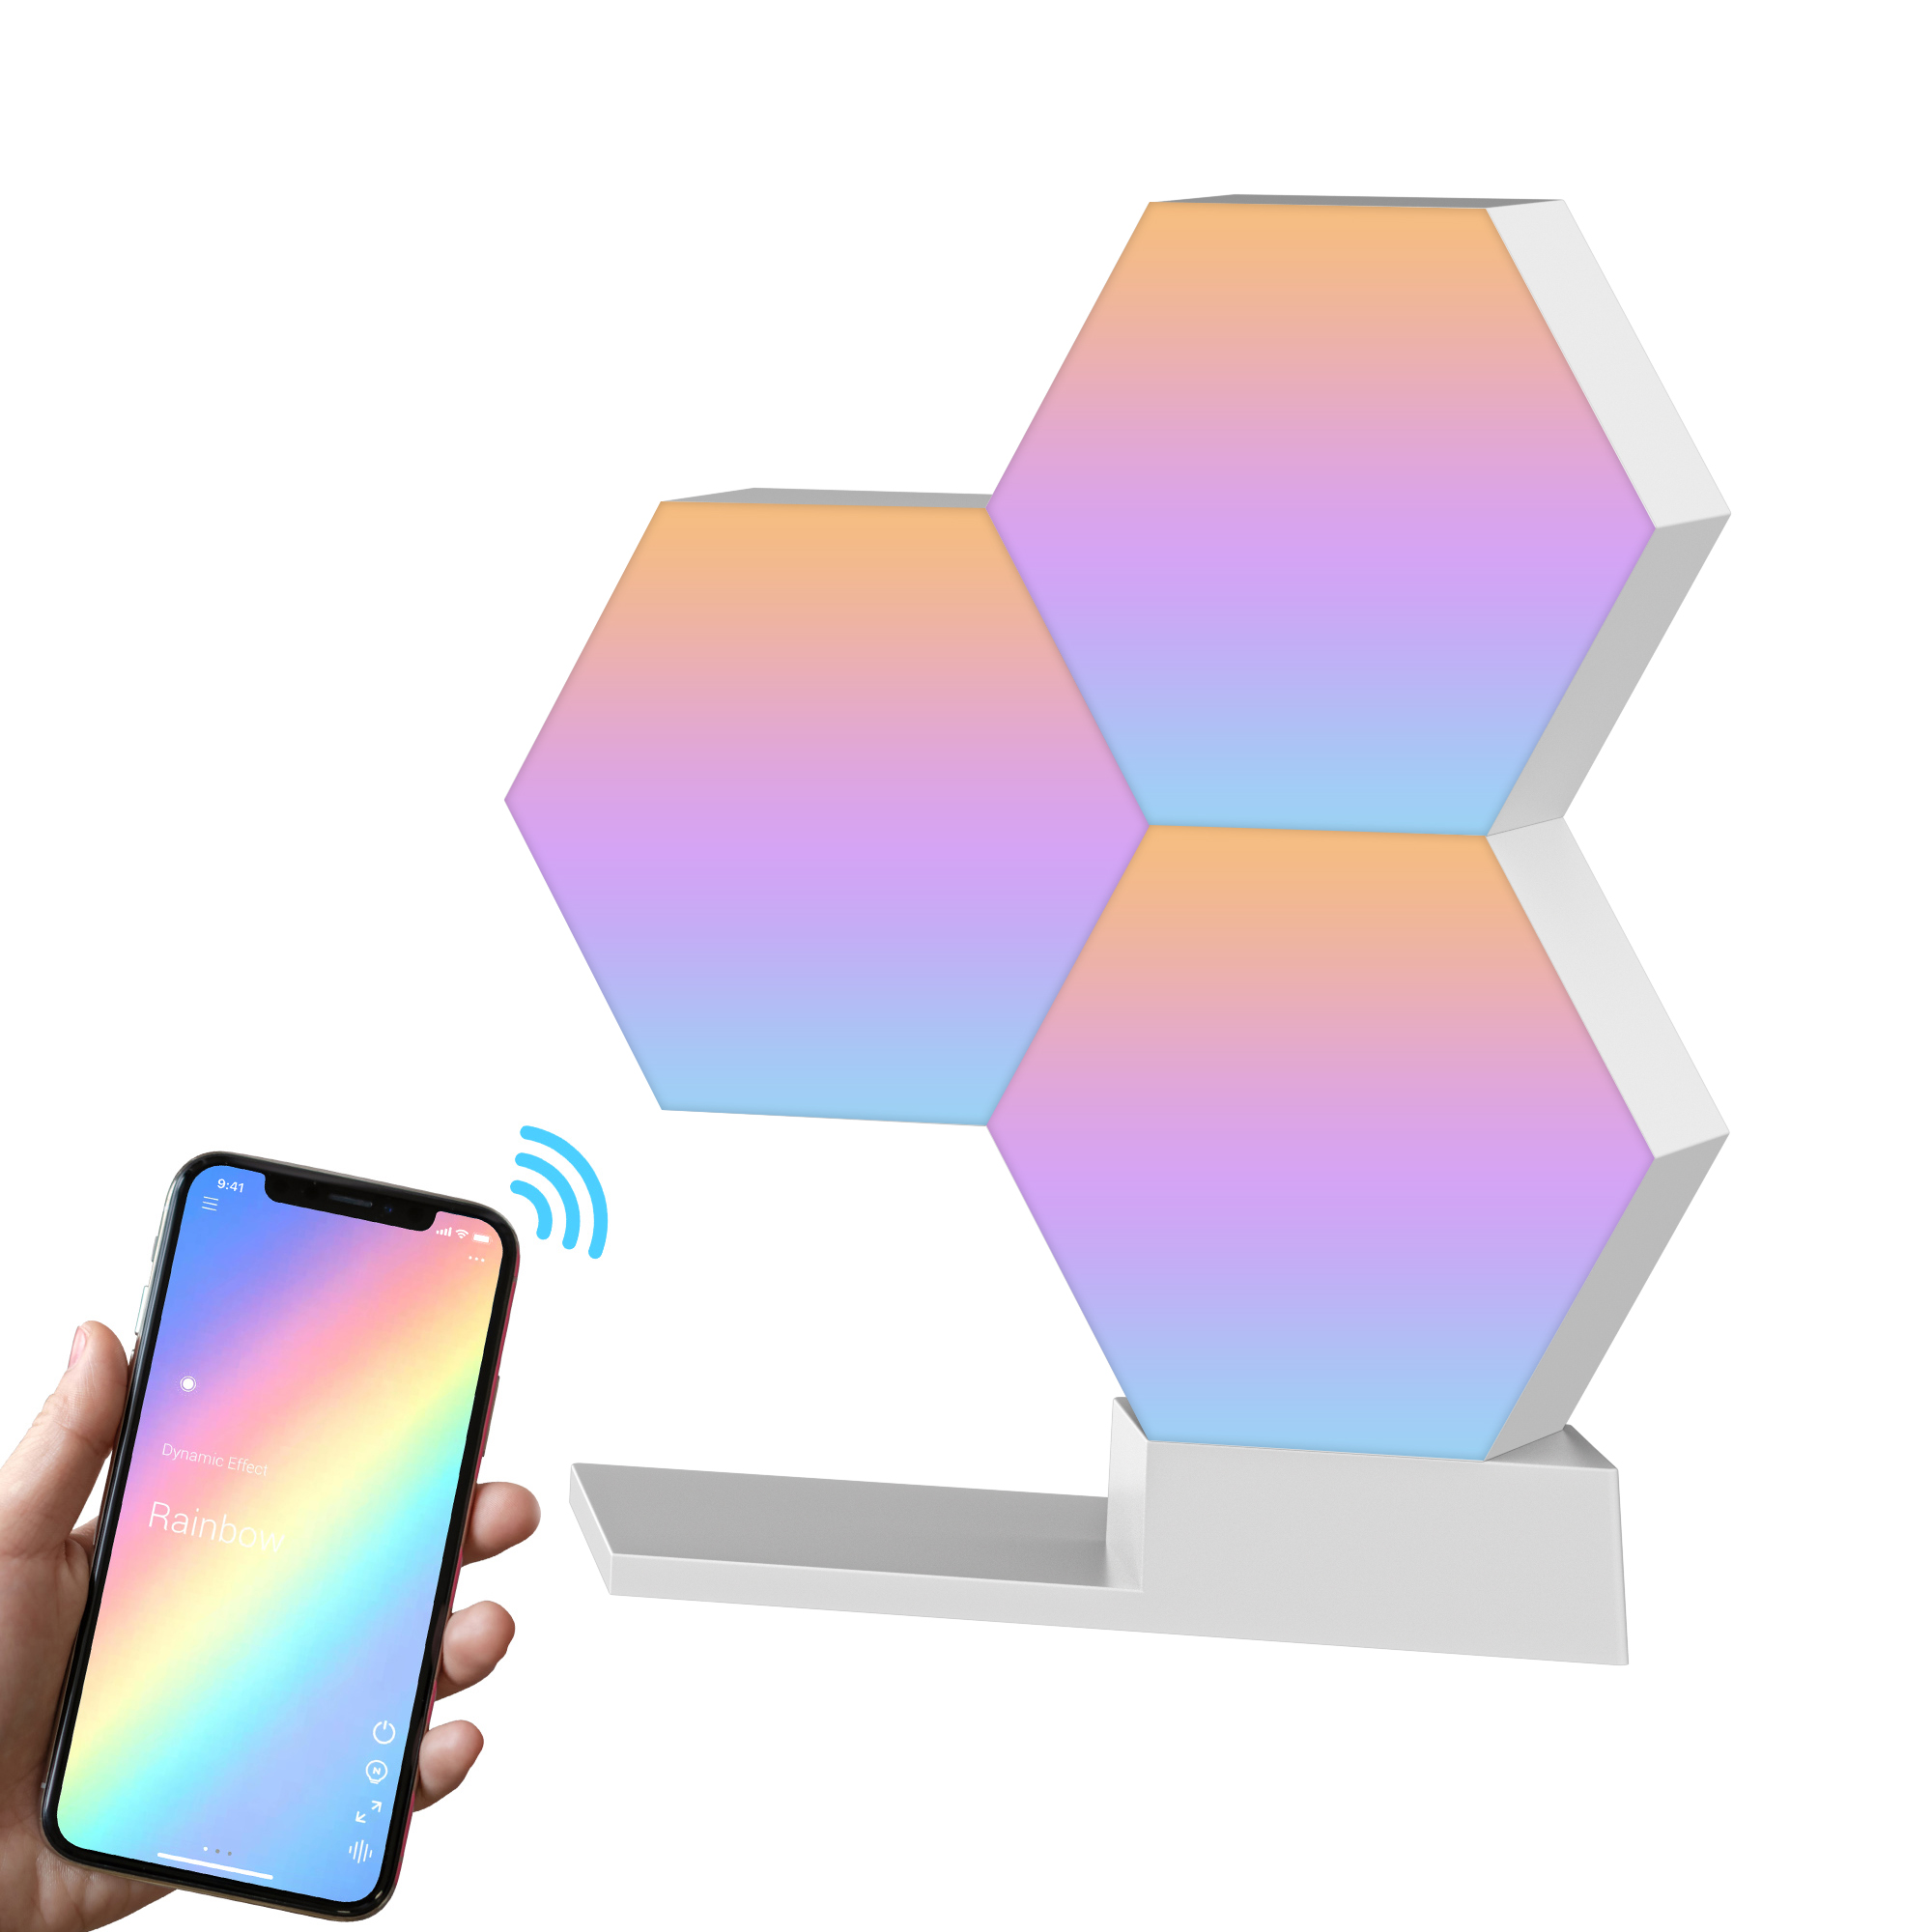 Yescom 3 Pcs WiFi Smart LED Light Kit DIY Voice Control Work with Alexa Google Home Gifts